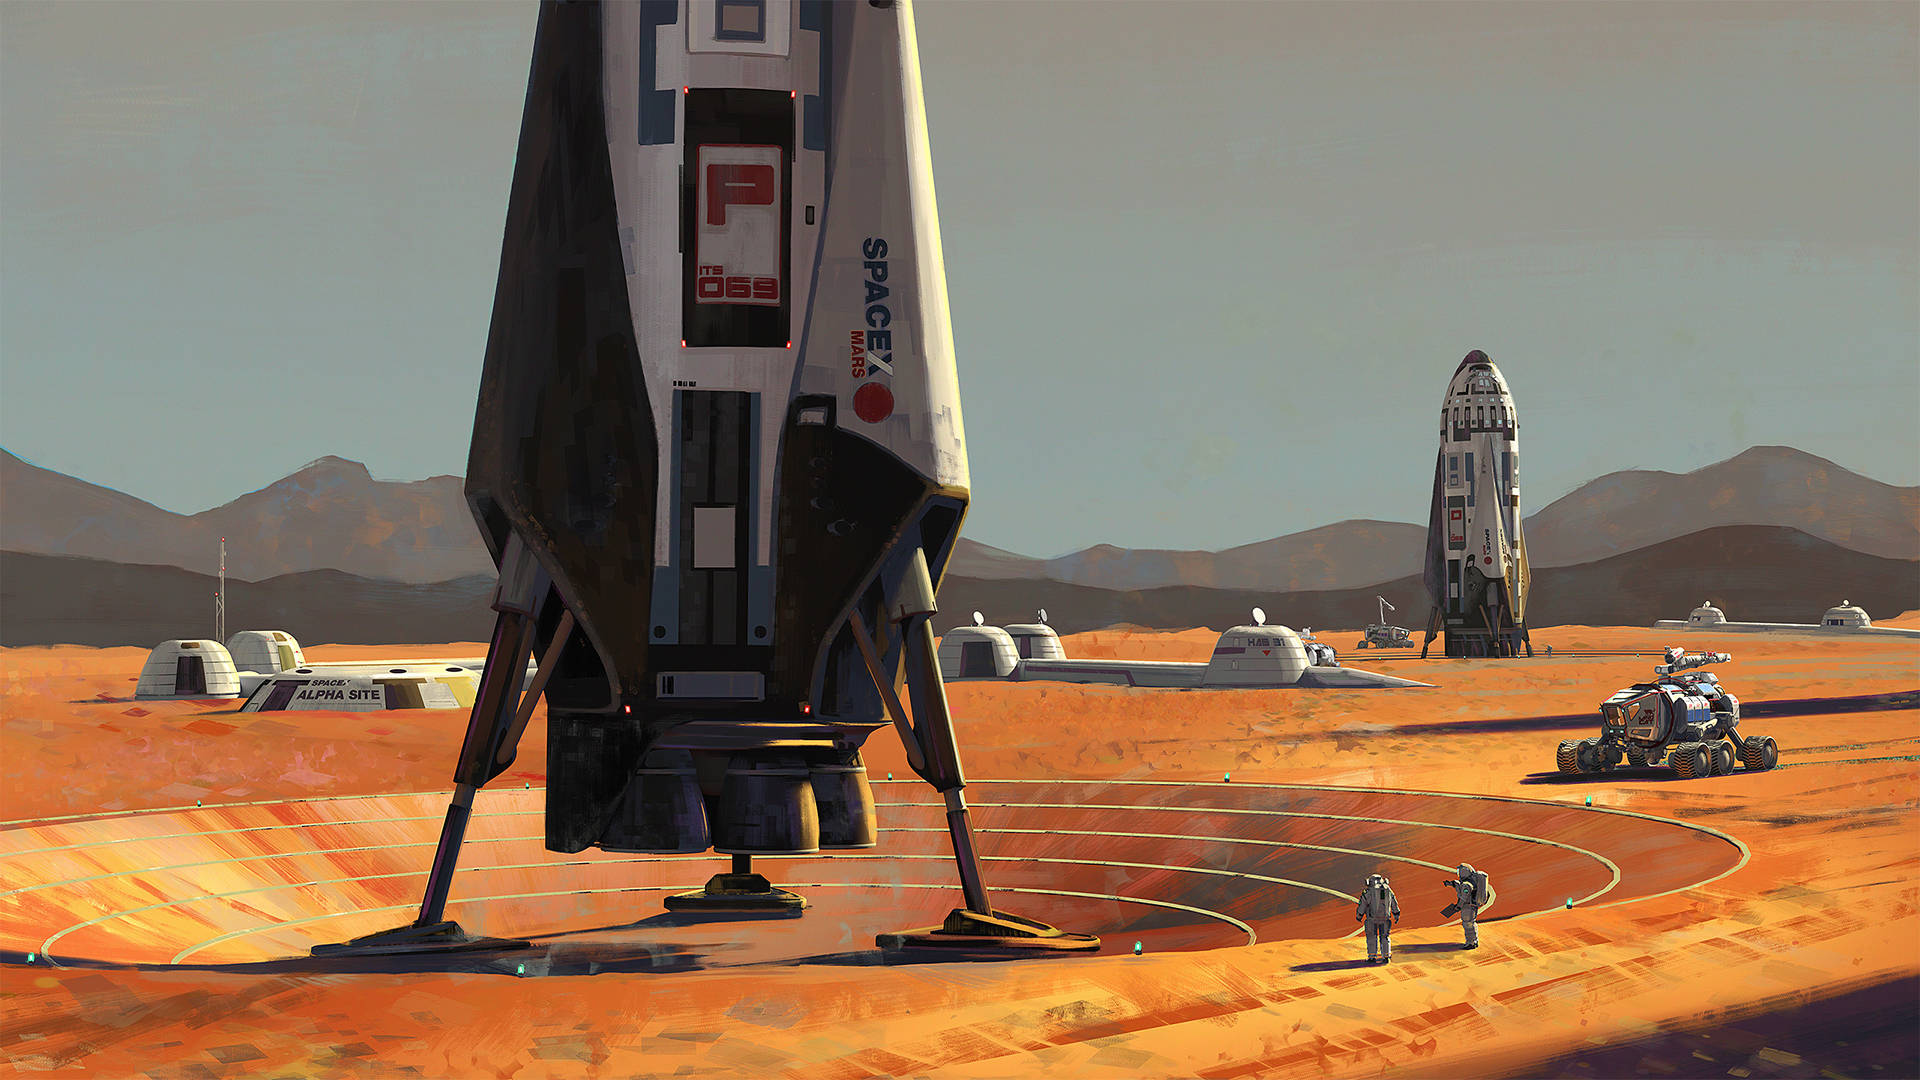 Spacex Its Starships At Mars Base Alpha Painting Wallpaper